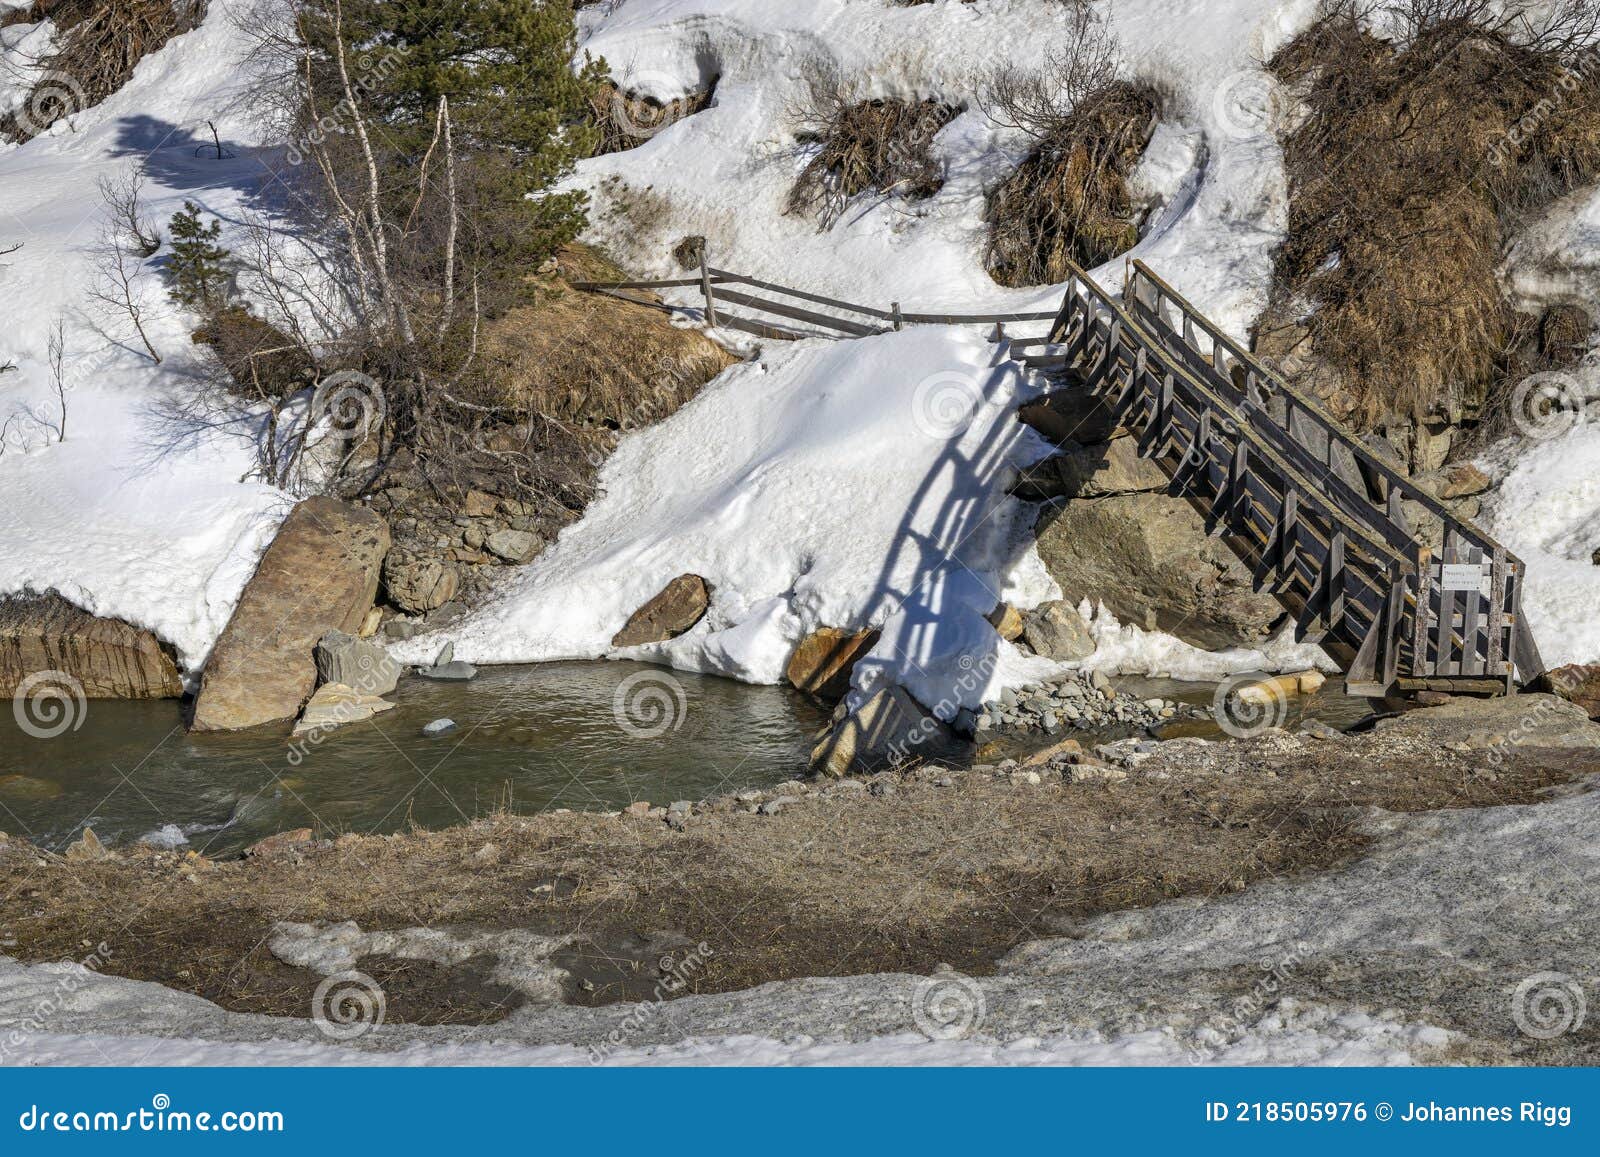 bridges in the venter valley in tirol, austria